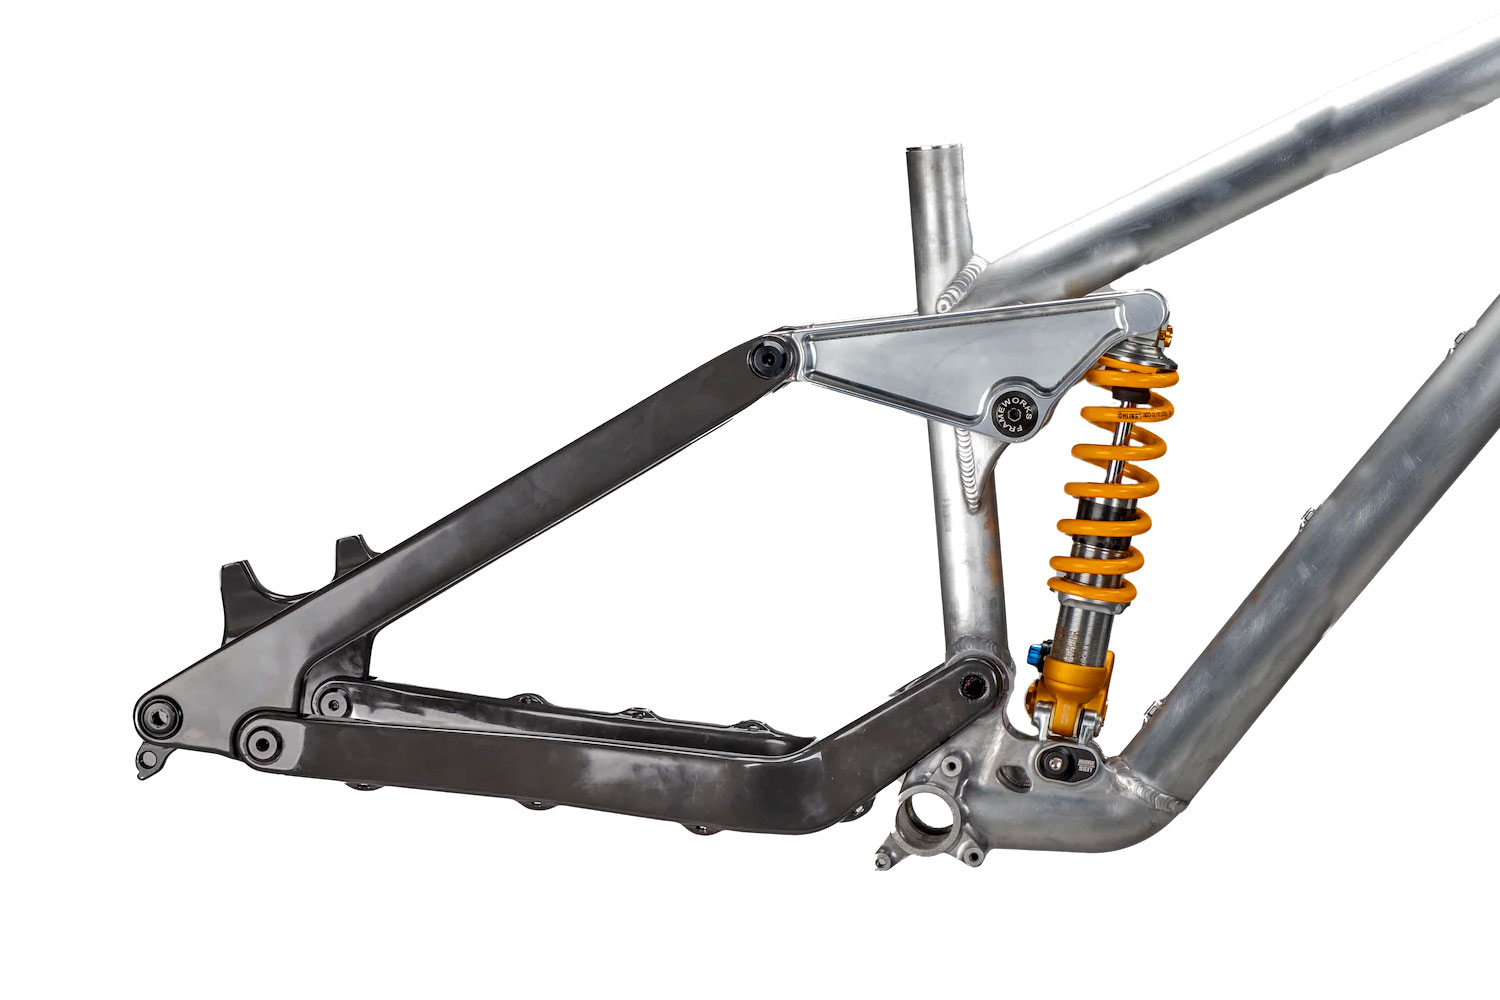 Frameworks DH bike frame, pre-order aluminum & carbon downhill bike project of Neko Mulally, carbon rear end